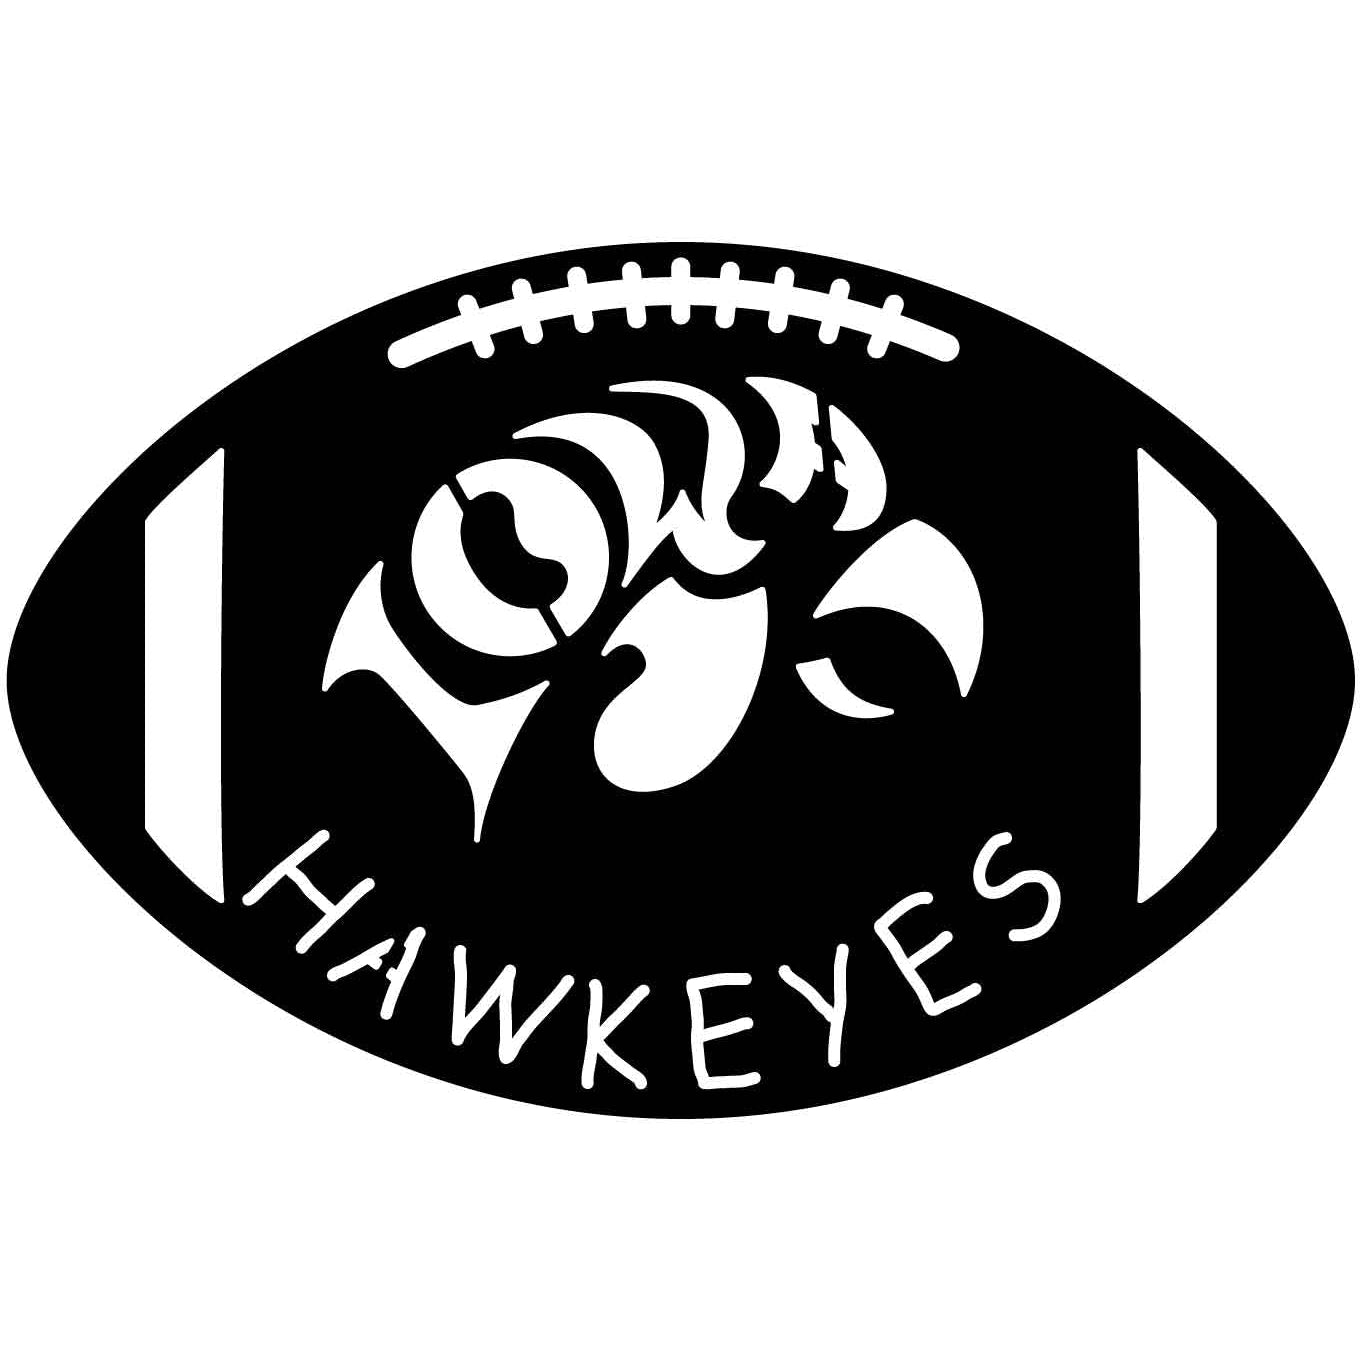 iowa hawkeyes logo outline